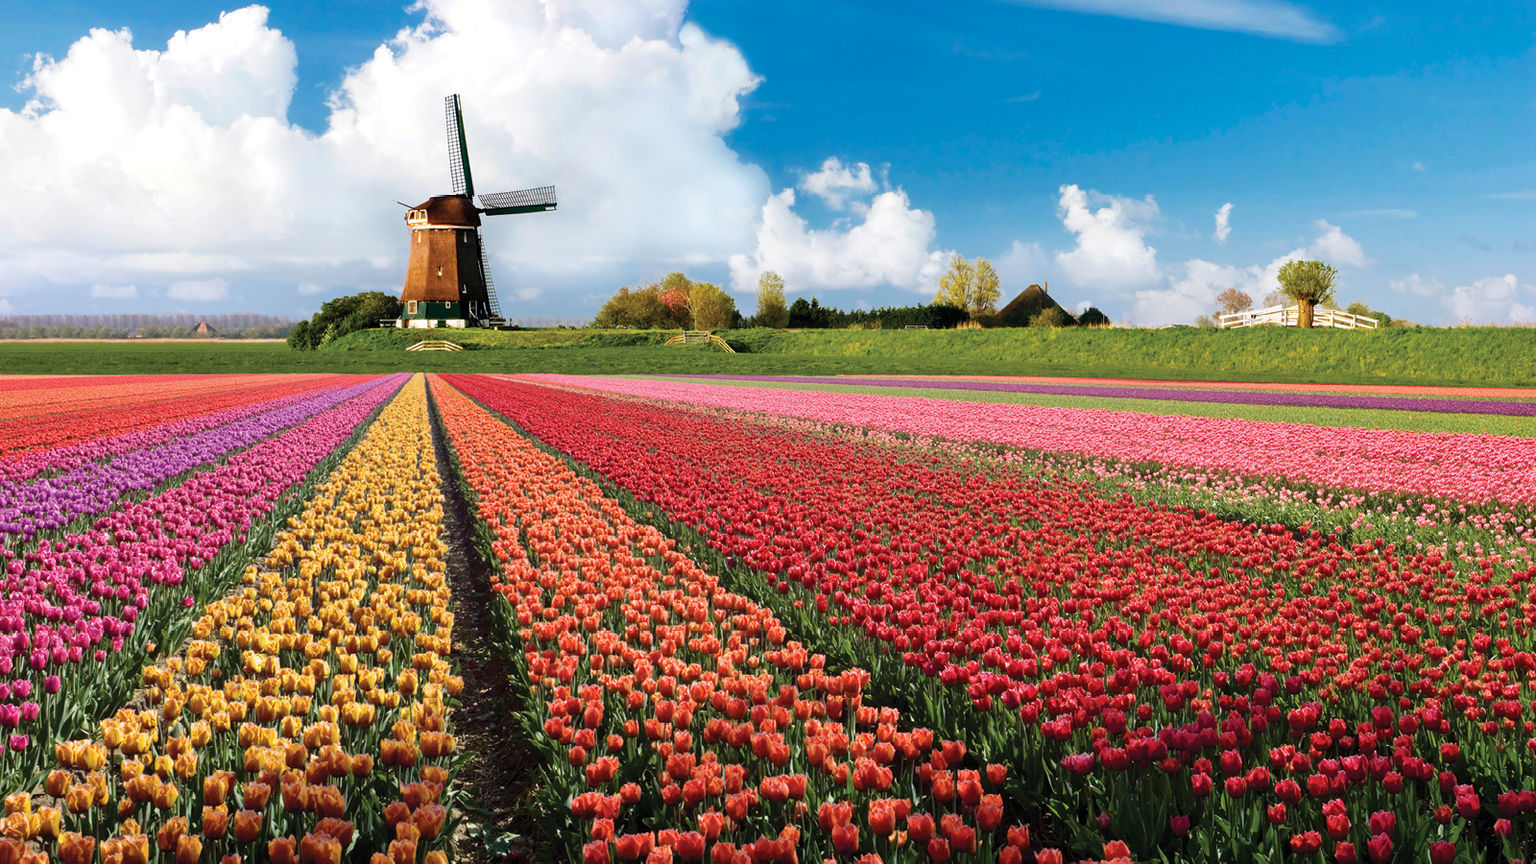 Wallpaper Tercantik Di Dunia - Cultivo De Tulipanes En Holanda - HD Wallpaper 